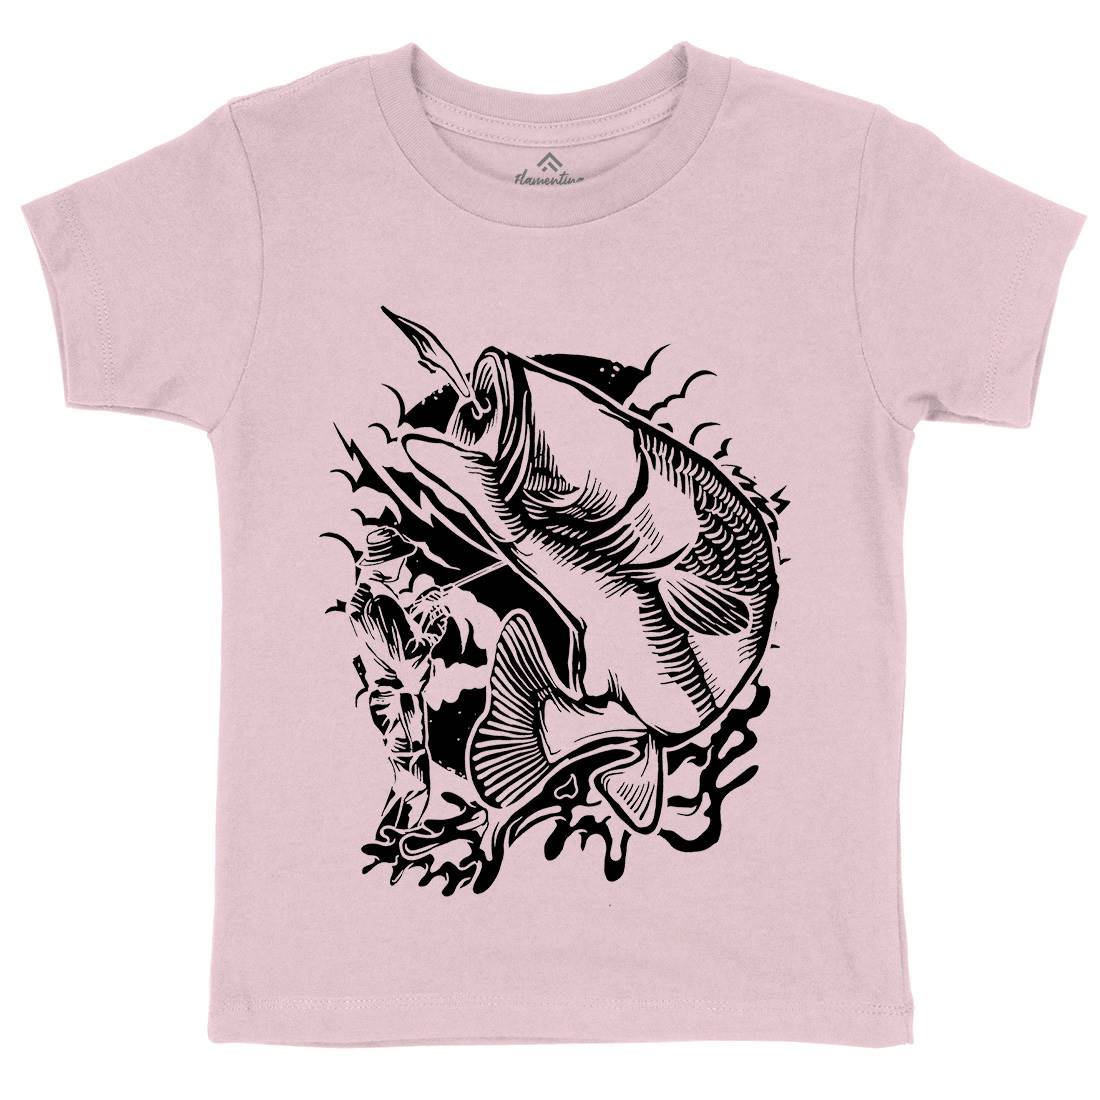 Fisherman Kids Crew Neck T-Shirt Fishing A529